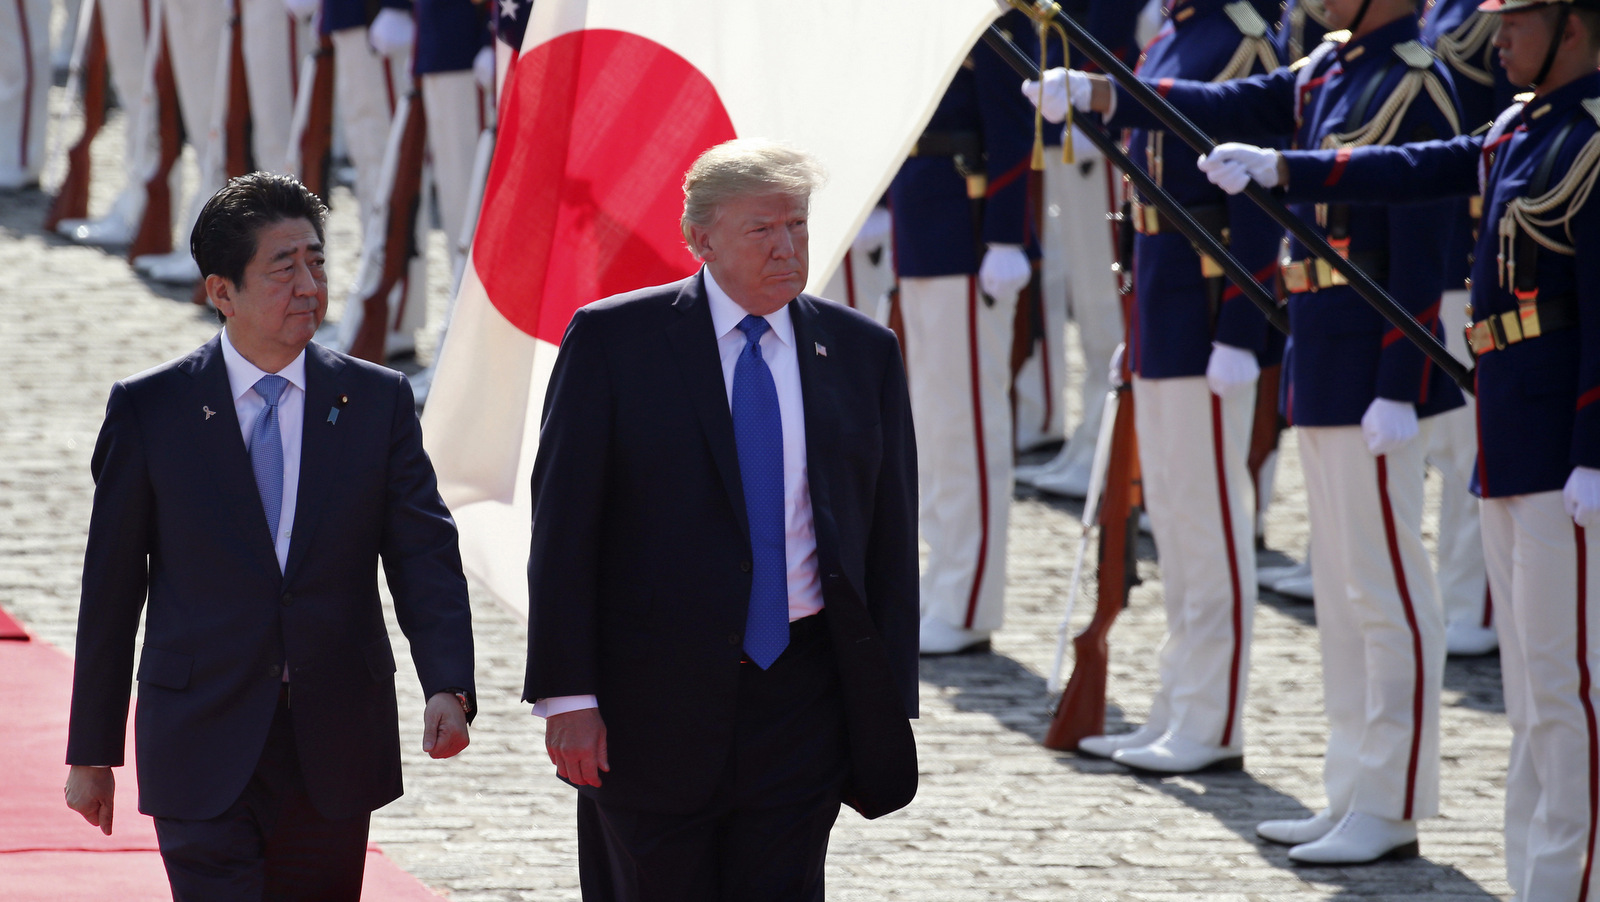 U.S. President Donald Trump reviews an honor guard during a welcome ceremony, escorted by Japanese Prime Minister Shinzo Abe at Akasaka Palace in Tokyo, Nov. 6, 2017. (AP/Koji Sasahara)